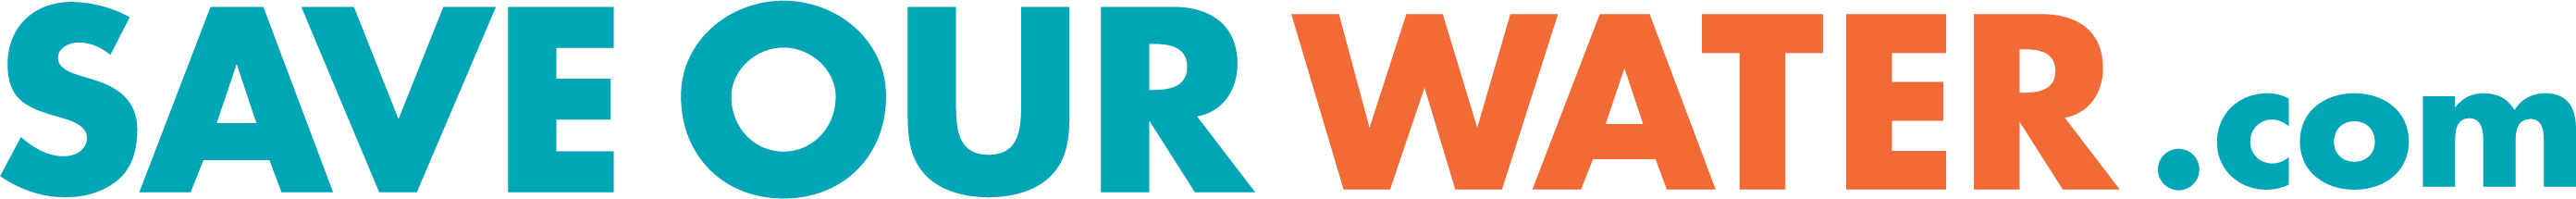 SaveOurWater.com Logo